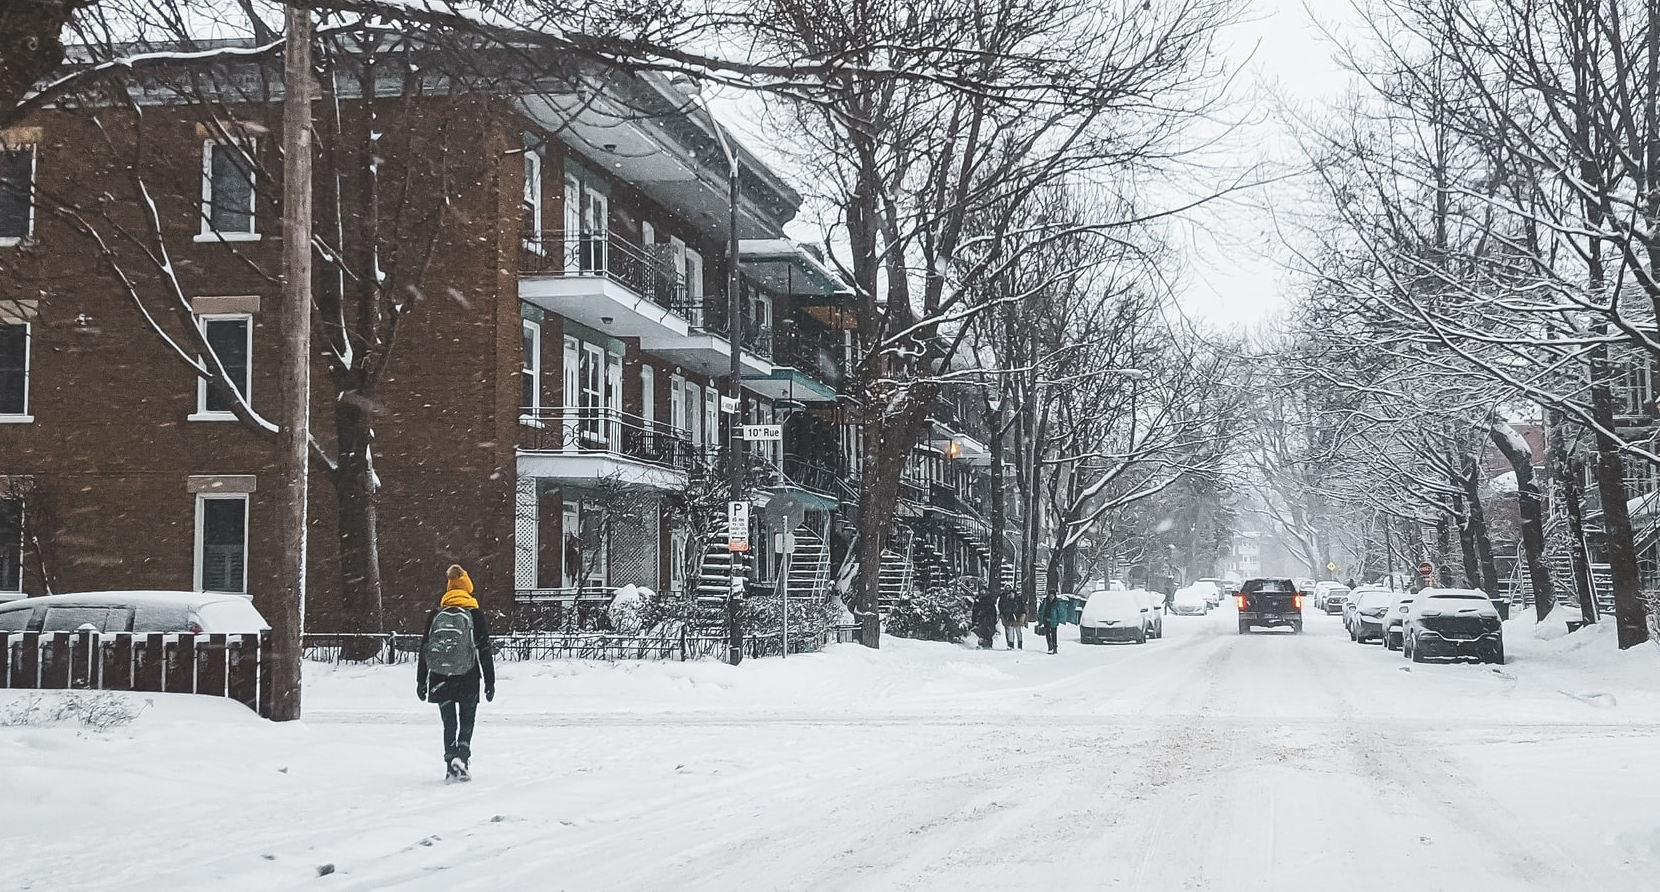 A child wearing a backpack walks down a snowy city neighborhood street